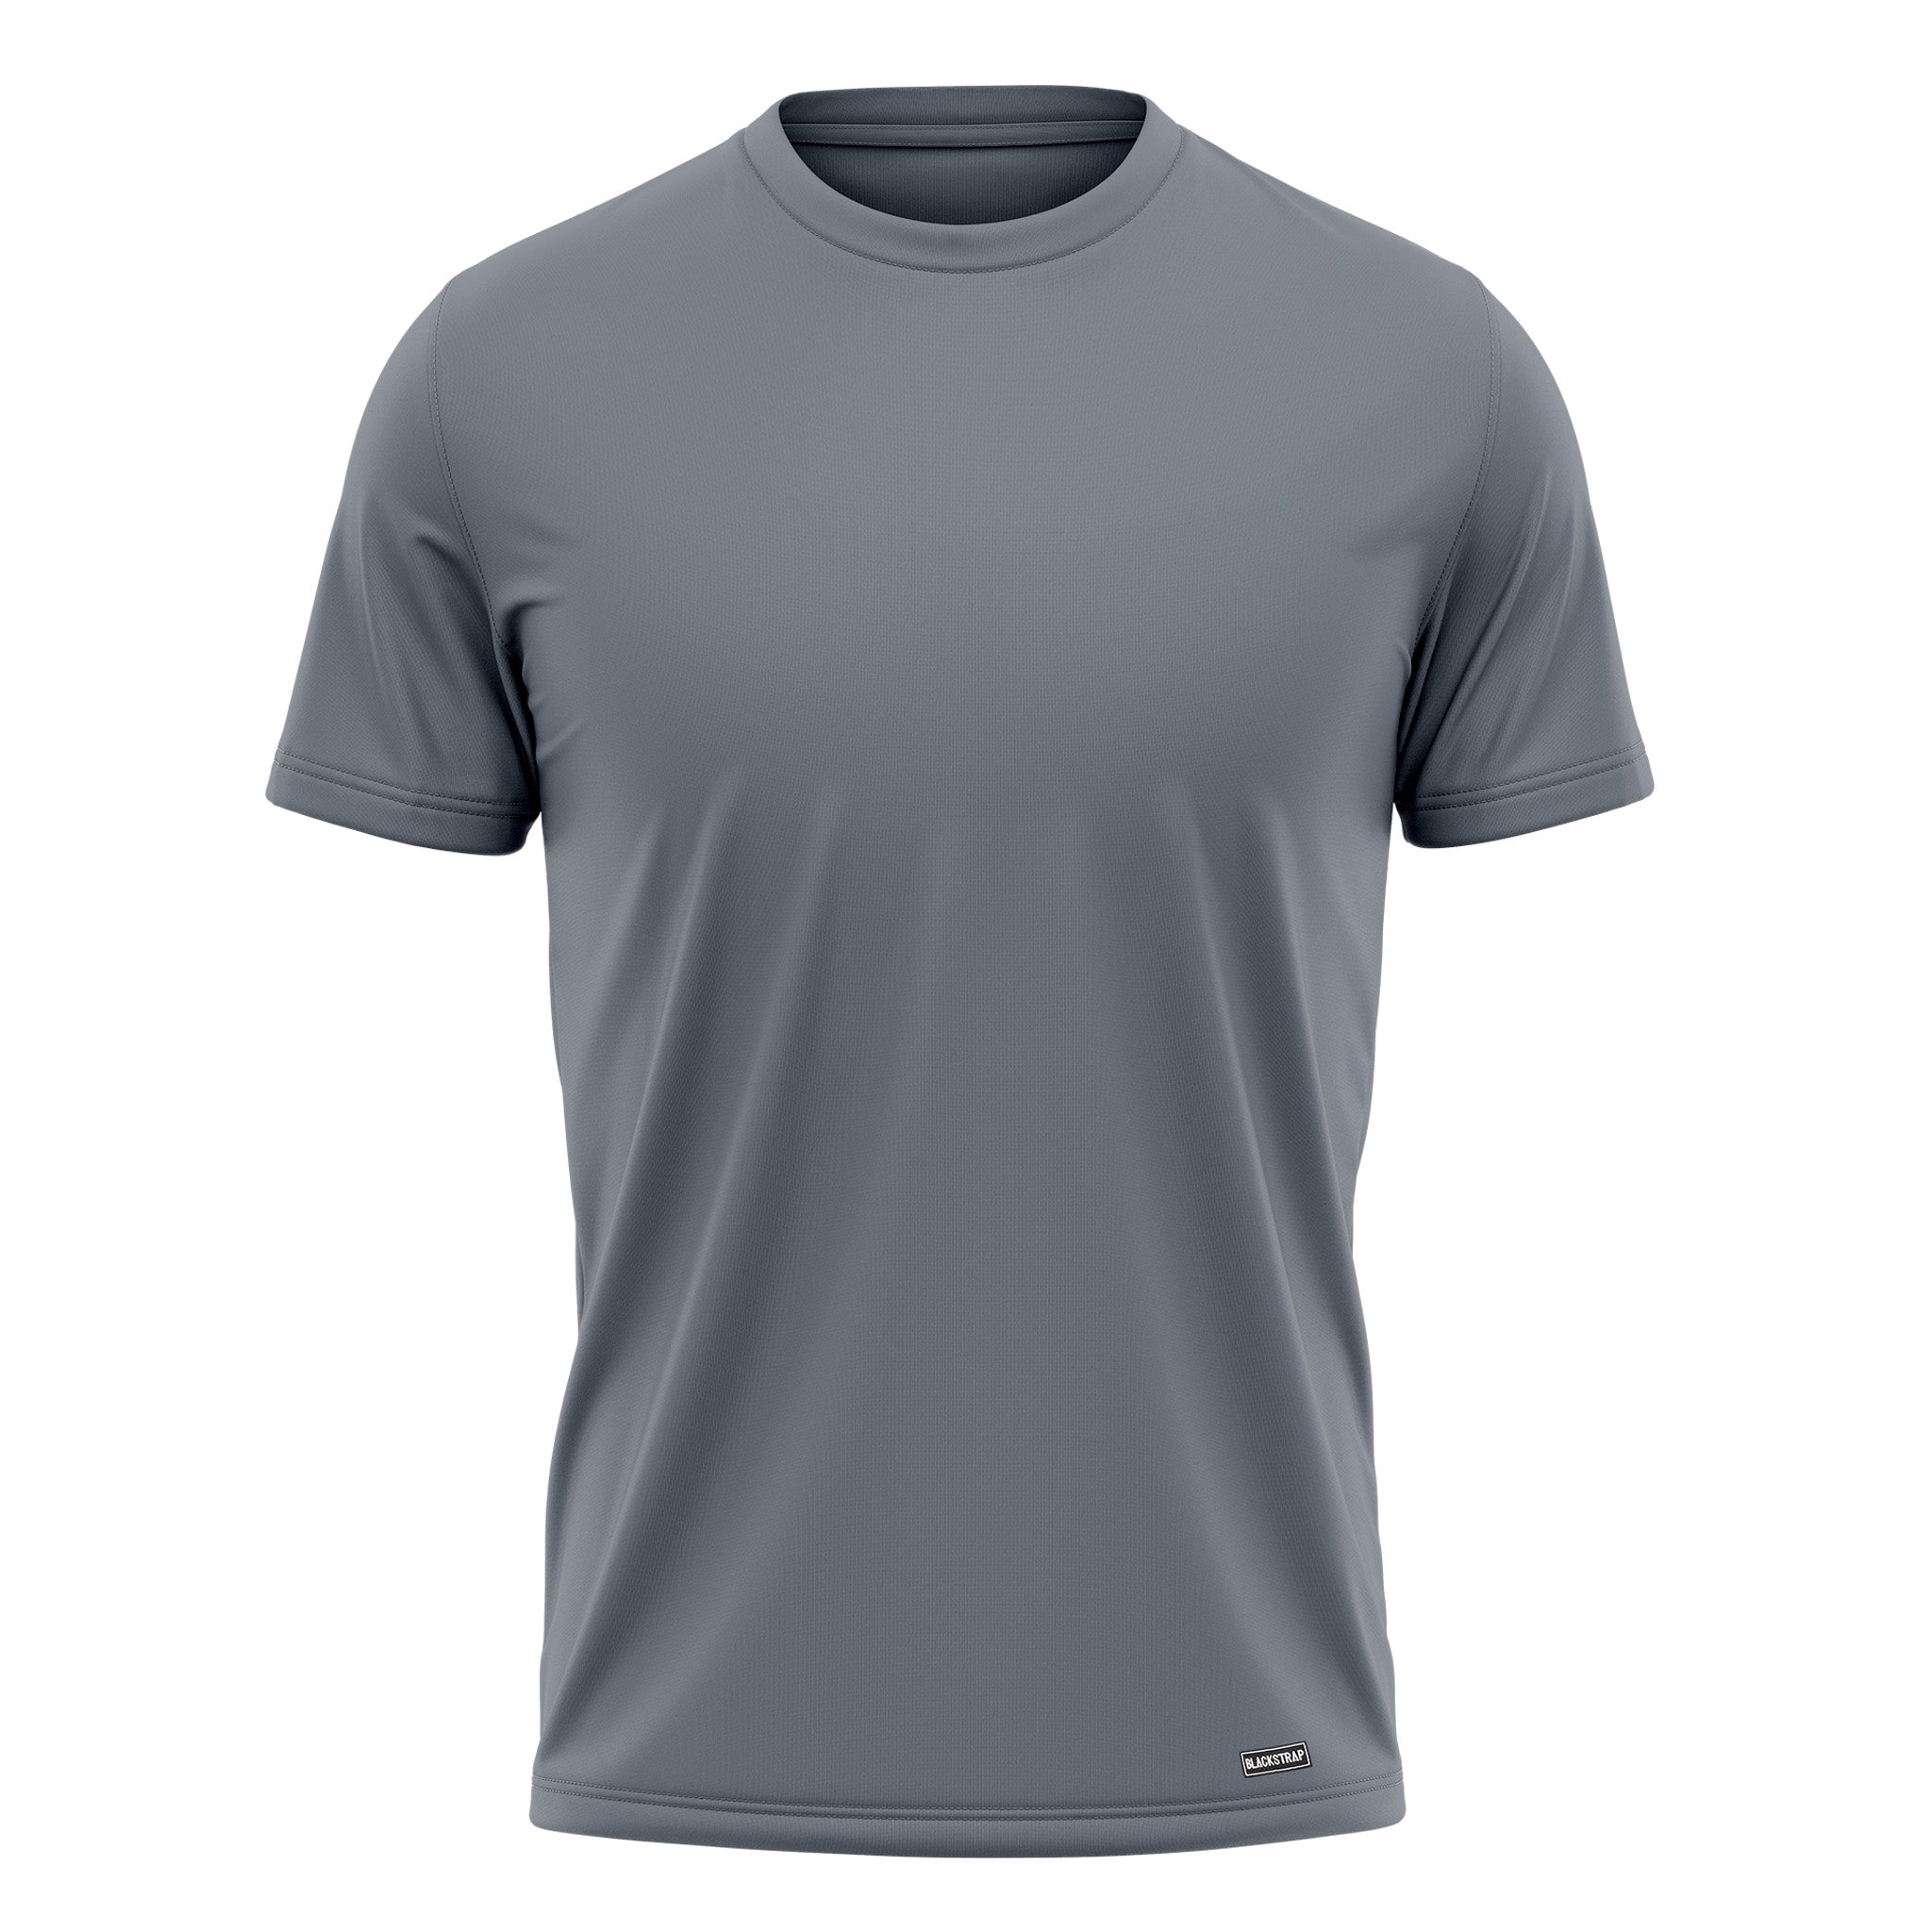 Men's Brackish T-Shirt BlackStrap Charcoal S 